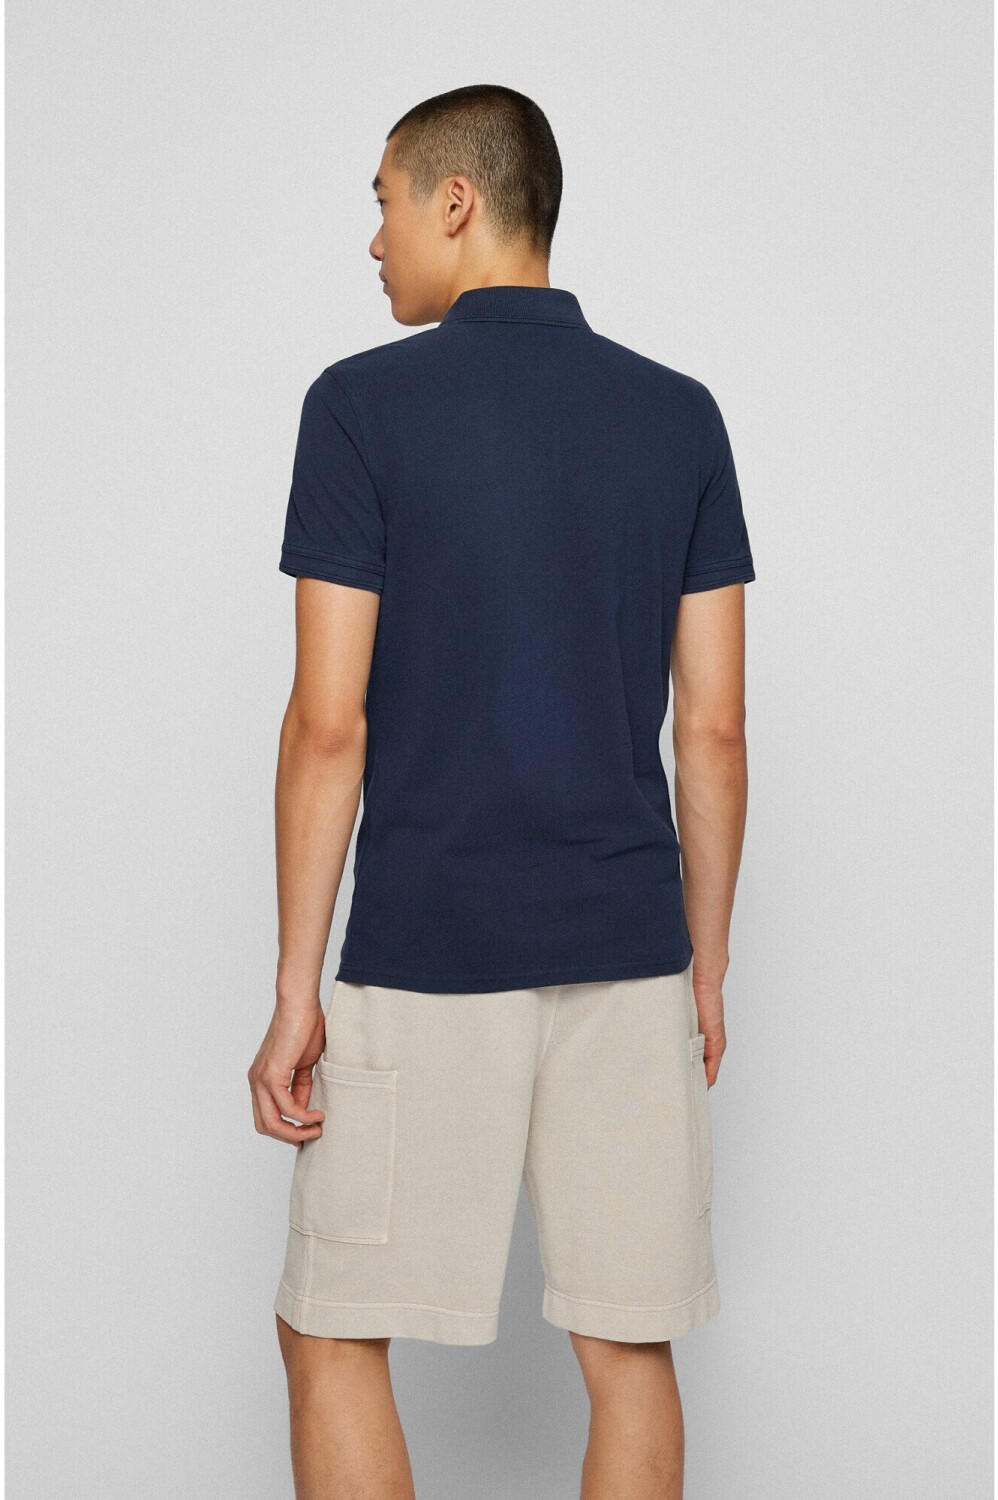 Hugo Boss Prime Slim-Fit Poloshirt (50468576-402) dark blue ab 48,00 € |  Preisvergleich bei